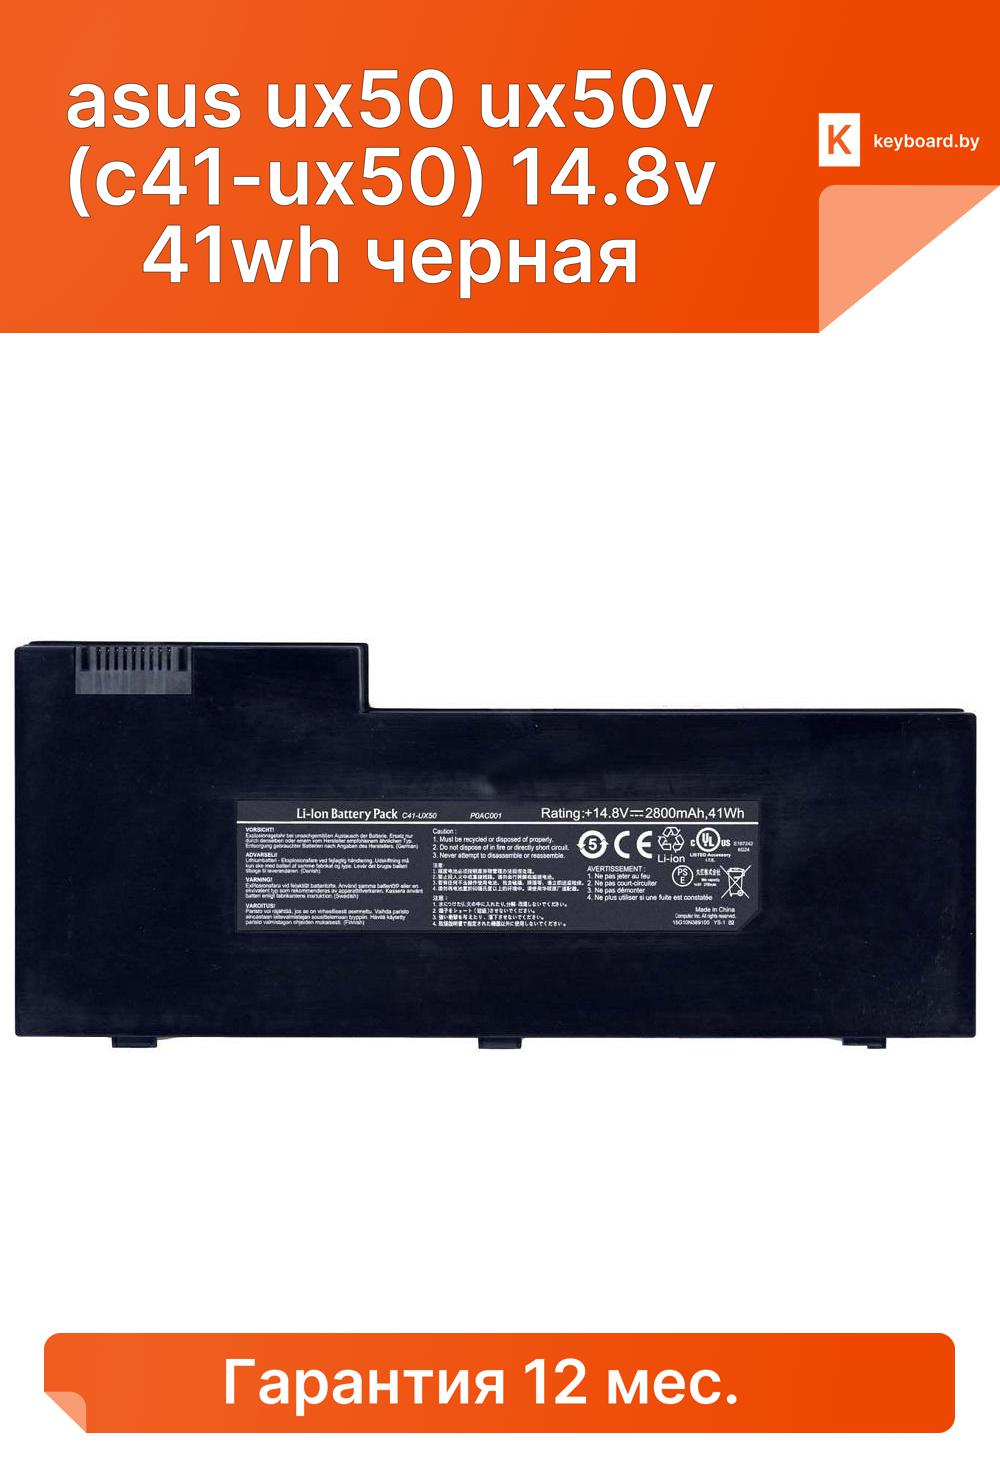 Аккумуляторная батарея для ноутбука asus ux50 ux50v (c41-ux50) 14.8v 41wh черная